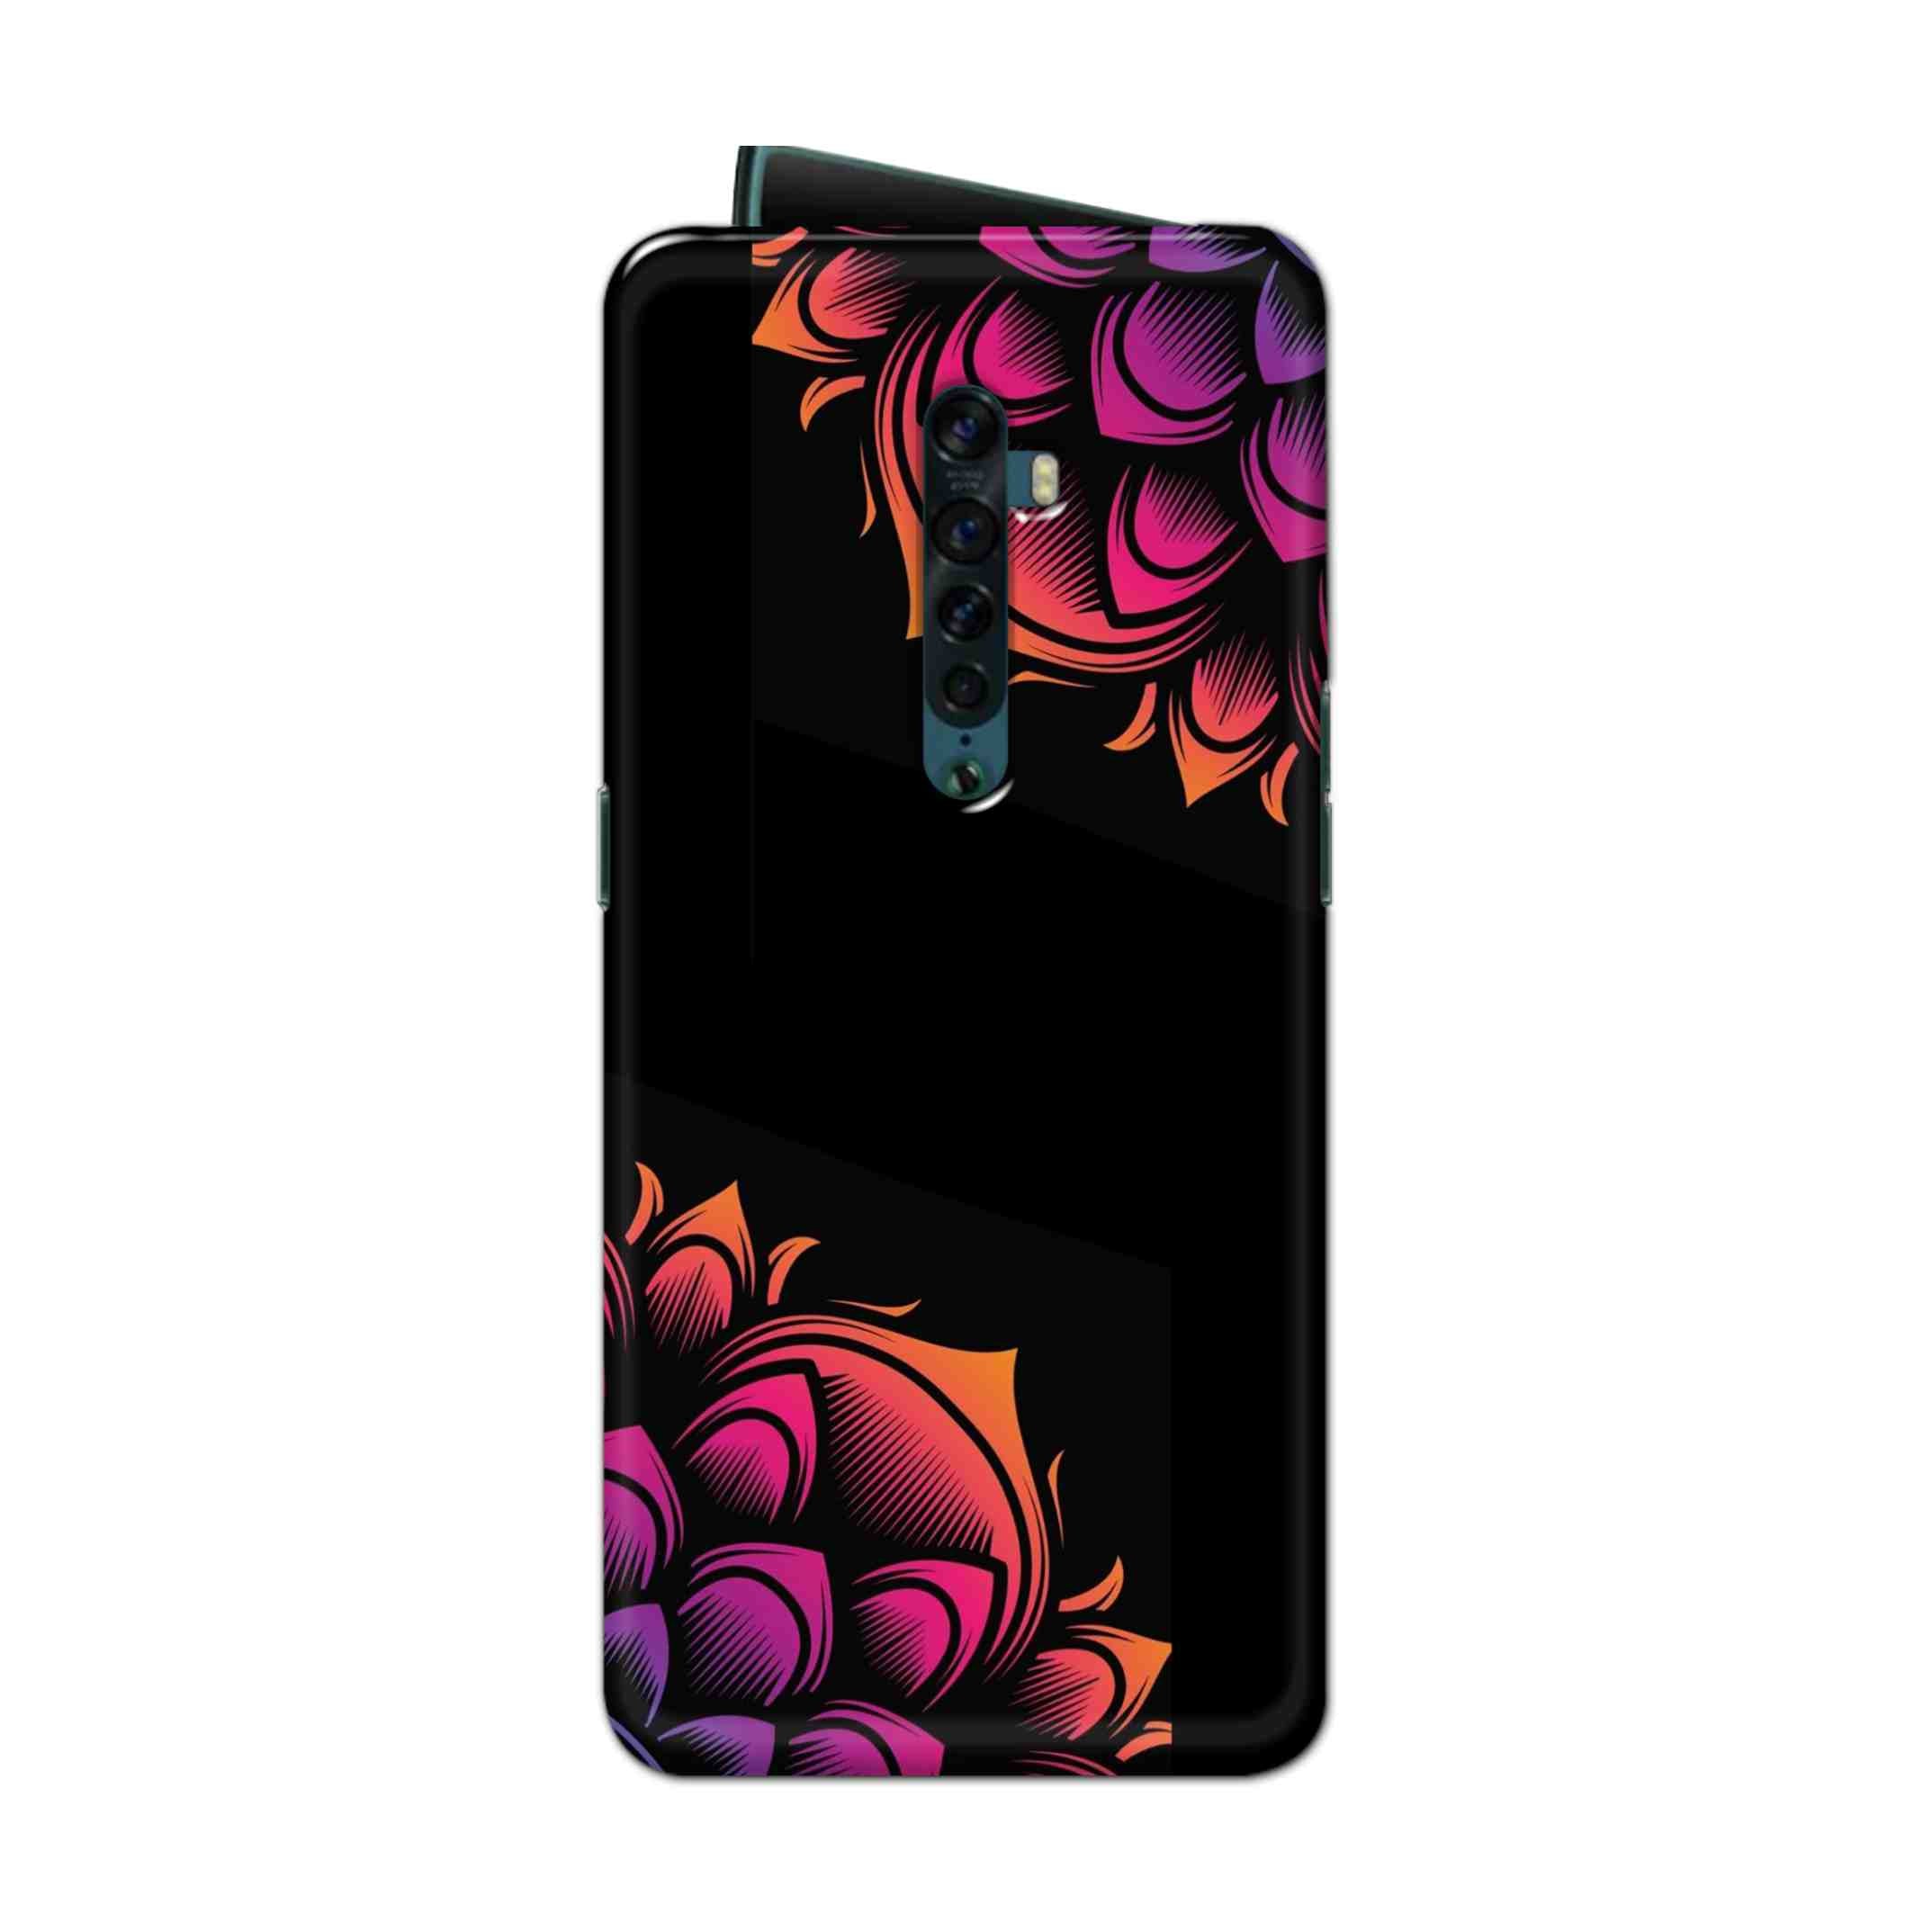 Buy Mandala Hard Back Mobile Phone Case Cover For Oppo Reno 2 Online